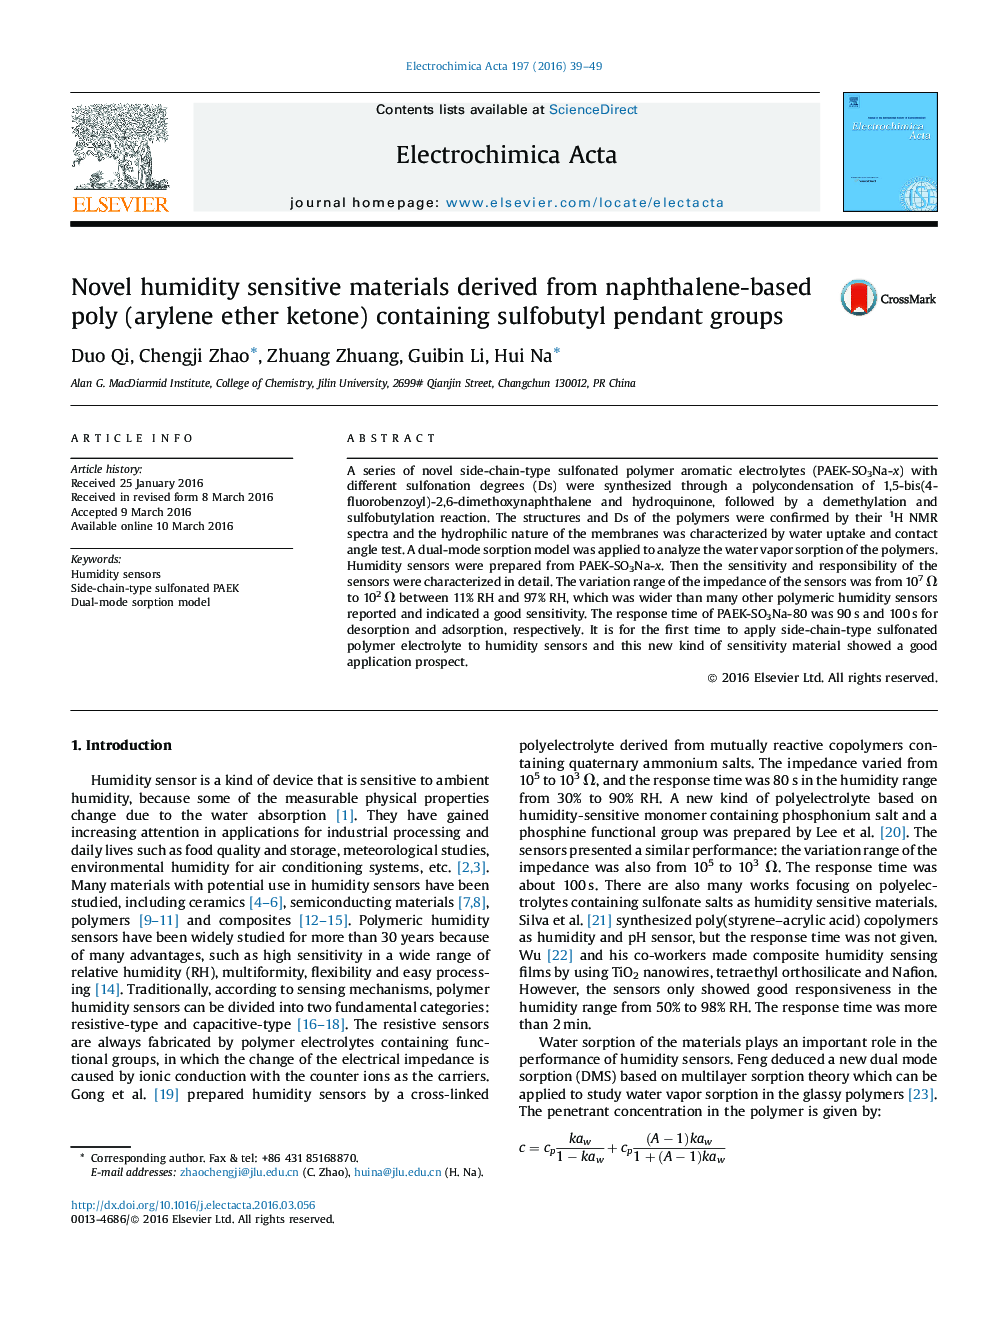 Novel humidity sensitive materials derived from naphthalene-based poly (arylene ether ketone) containing sulfobutyl pendant groups